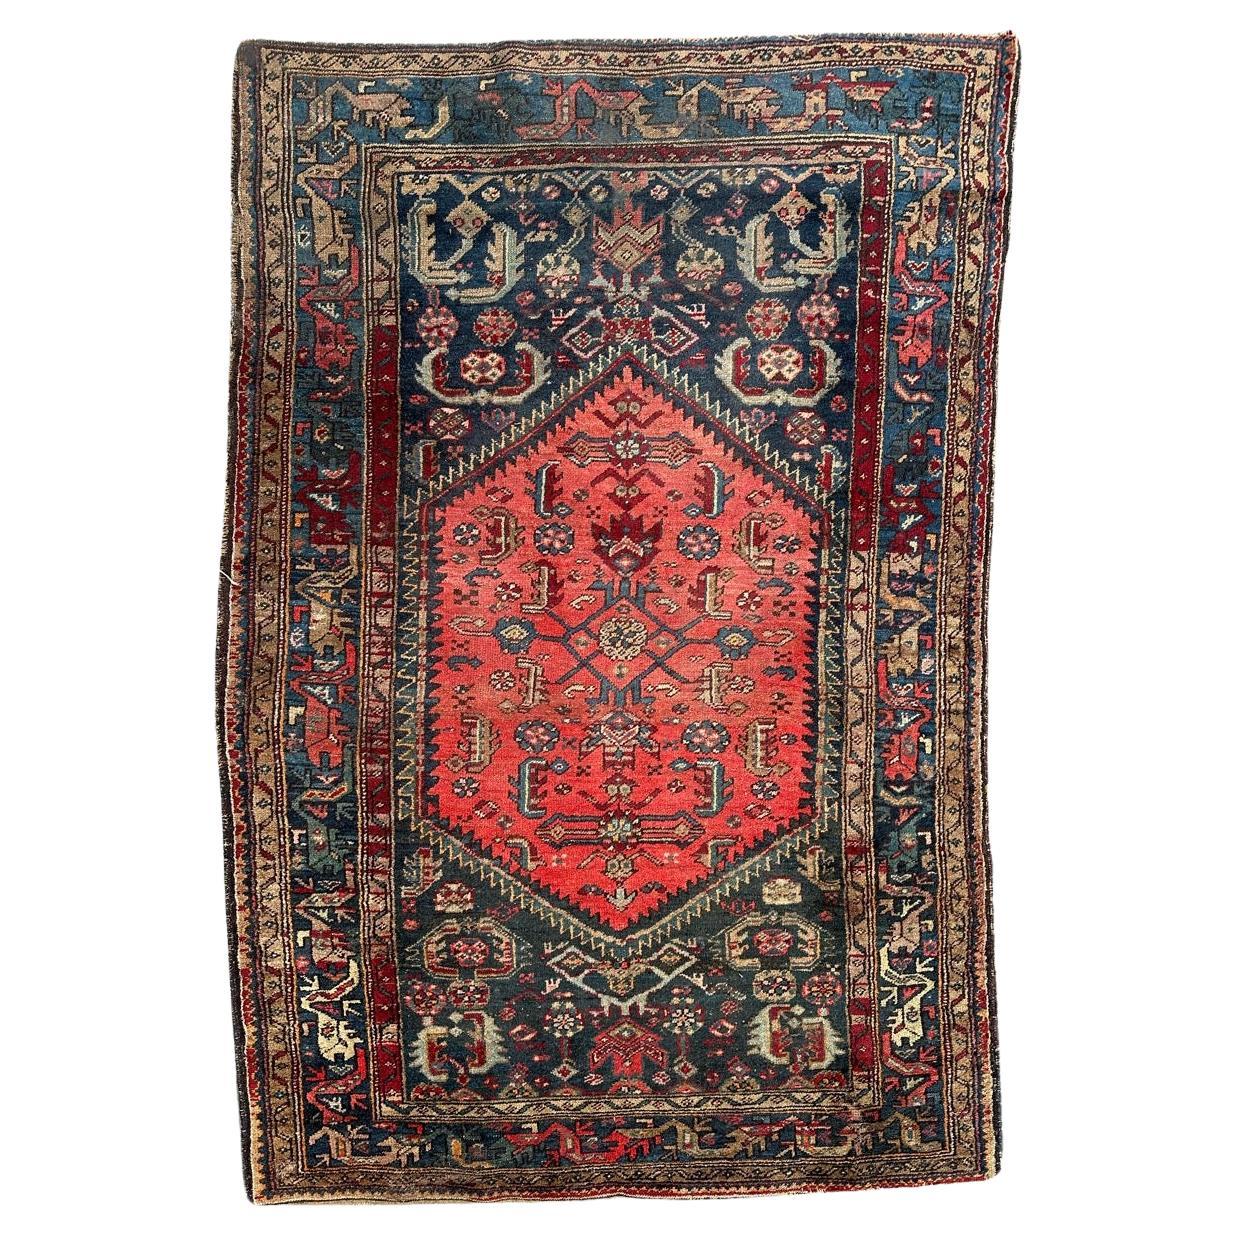 Bobyrug’s pretty mid century tribal Hamadan rug